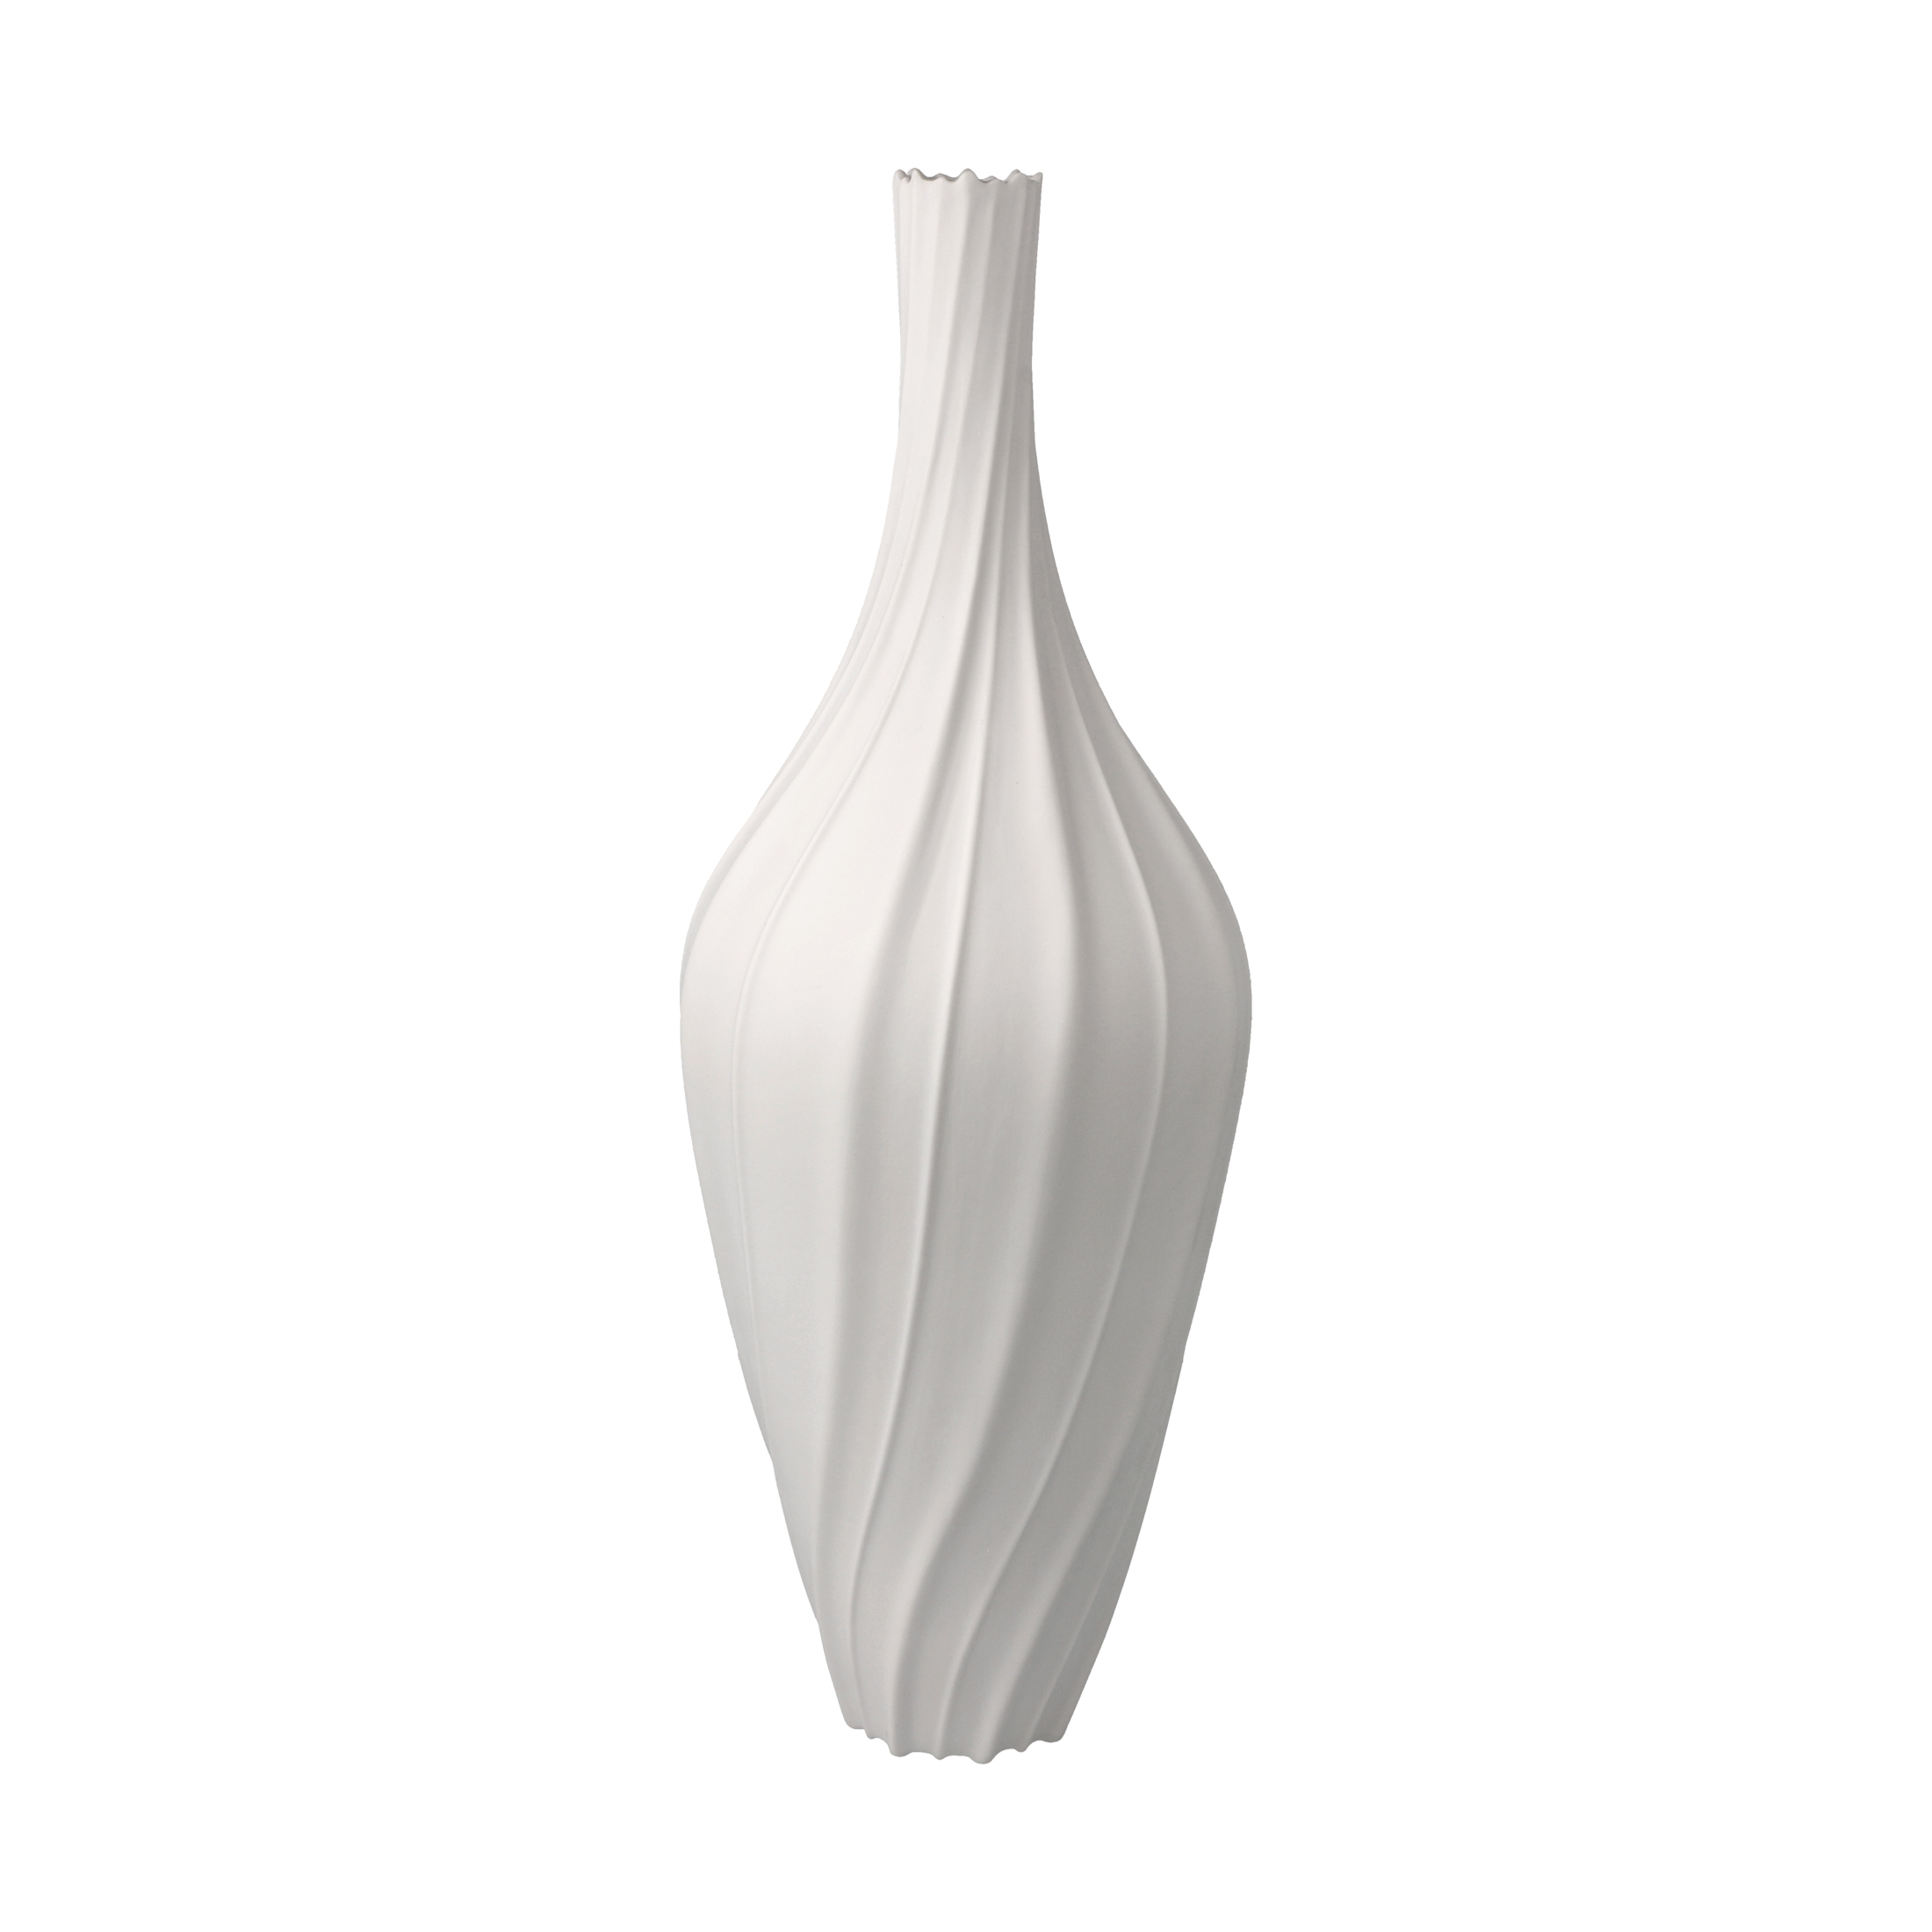 Goebel Vase Kaiser Porzellan - Bahar 31 - weiss